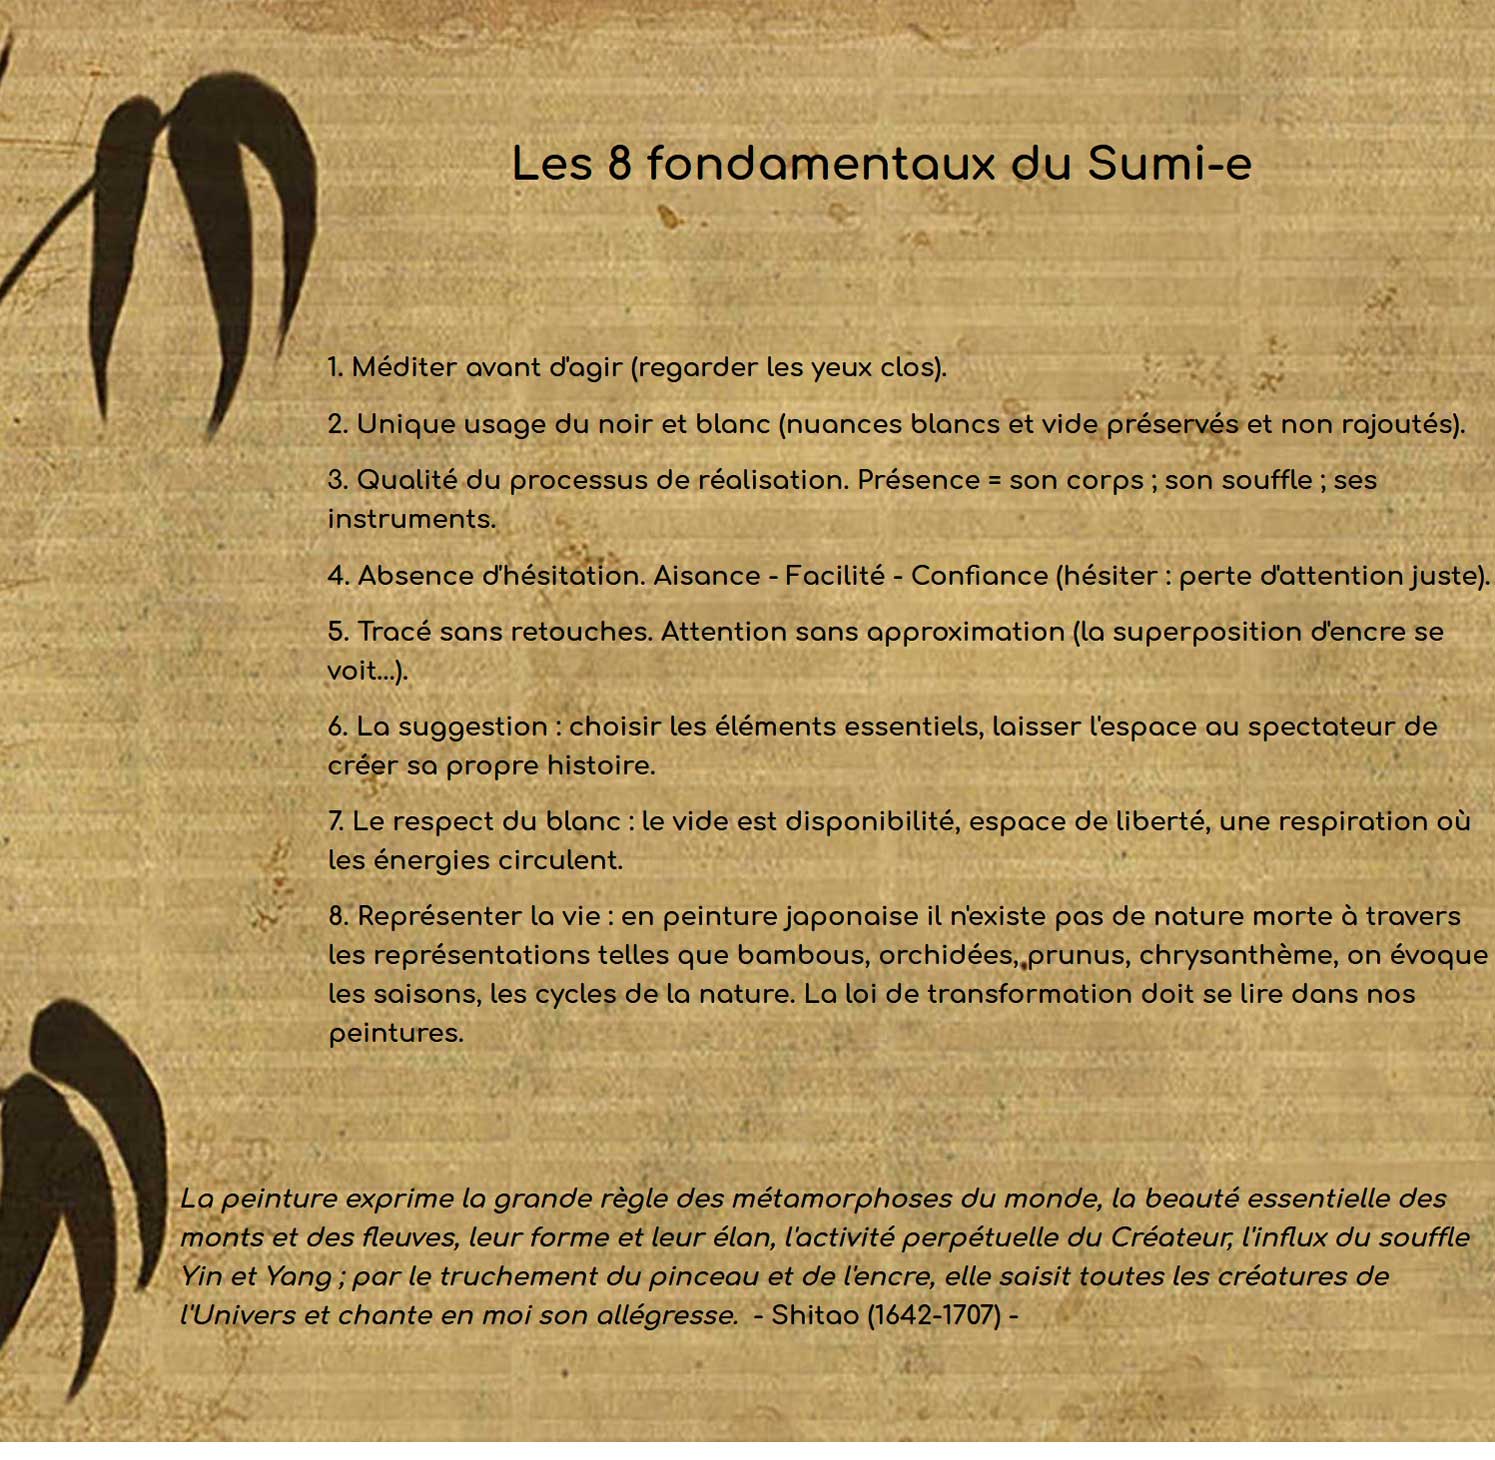 Les 8 fondamentaux du Sumi-e